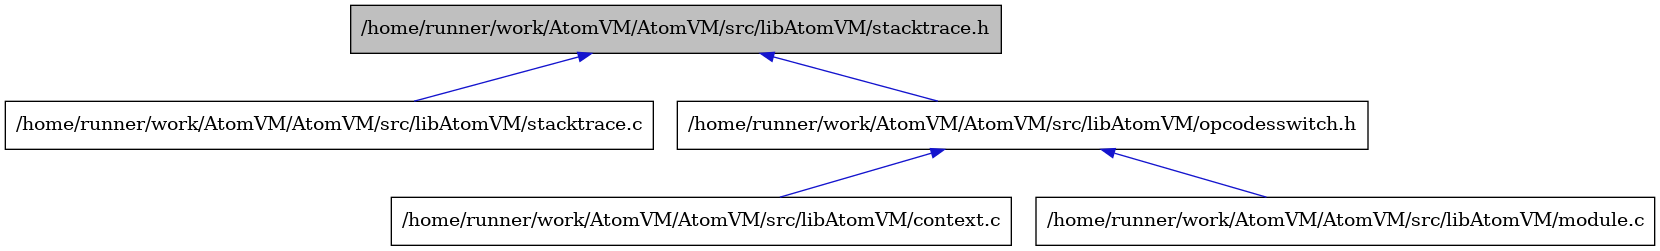 digraph {
    graph [bgcolor="#00000000"]
    node [shape=rectangle style=filled fillcolor="#FFFFFF" font=Helvetica padding=2]
    edge [color="#1414CE"]
    "3" [label="/home/runner/work/AtomVM/AtomVM/src/libAtomVM/context.c" tooltip="/home/runner/work/AtomVM/AtomVM/src/libAtomVM/context.c"]
    "5" [label="/home/runner/work/AtomVM/AtomVM/src/libAtomVM/stacktrace.c" tooltip="/home/runner/work/AtomVM/AtomVM/src/libAtomVM/stacktrace.c"]
    "1" [label="/home/runner/work/AtomVM/AtomVM/src/libAtomVM/stacktrace.h" tooltip="/home/runner/work/AtomVM/AtomVM/src/libAtomVM/stacktrace.h" fillcolor="#BFBFBF"]
    "4" [label="/home/runner/work/AtomVM/AtomVM/src/libAtomVM/module.c" tooltip="/home/runner/work/AtomVM/AtomVM/src/libAtomVM/module.c"]
    "2" [label="/home/runner/work/AtomVM/AtomVM/src/libAtomVM/opcodesswitch.h" tooltip="/home/runner/work/AtomVM/AtomVM/src/libAtomVM/opcodesswitch.h"]
    "1" -> "2" [dir=back tooltip="include"]
    "1" -> "5" [dir=back tooltip="include"]
    "2" -> "3" [dir=back tooltip="include"]
    "2" -> "4" [dir=back tooltip="include"]
}